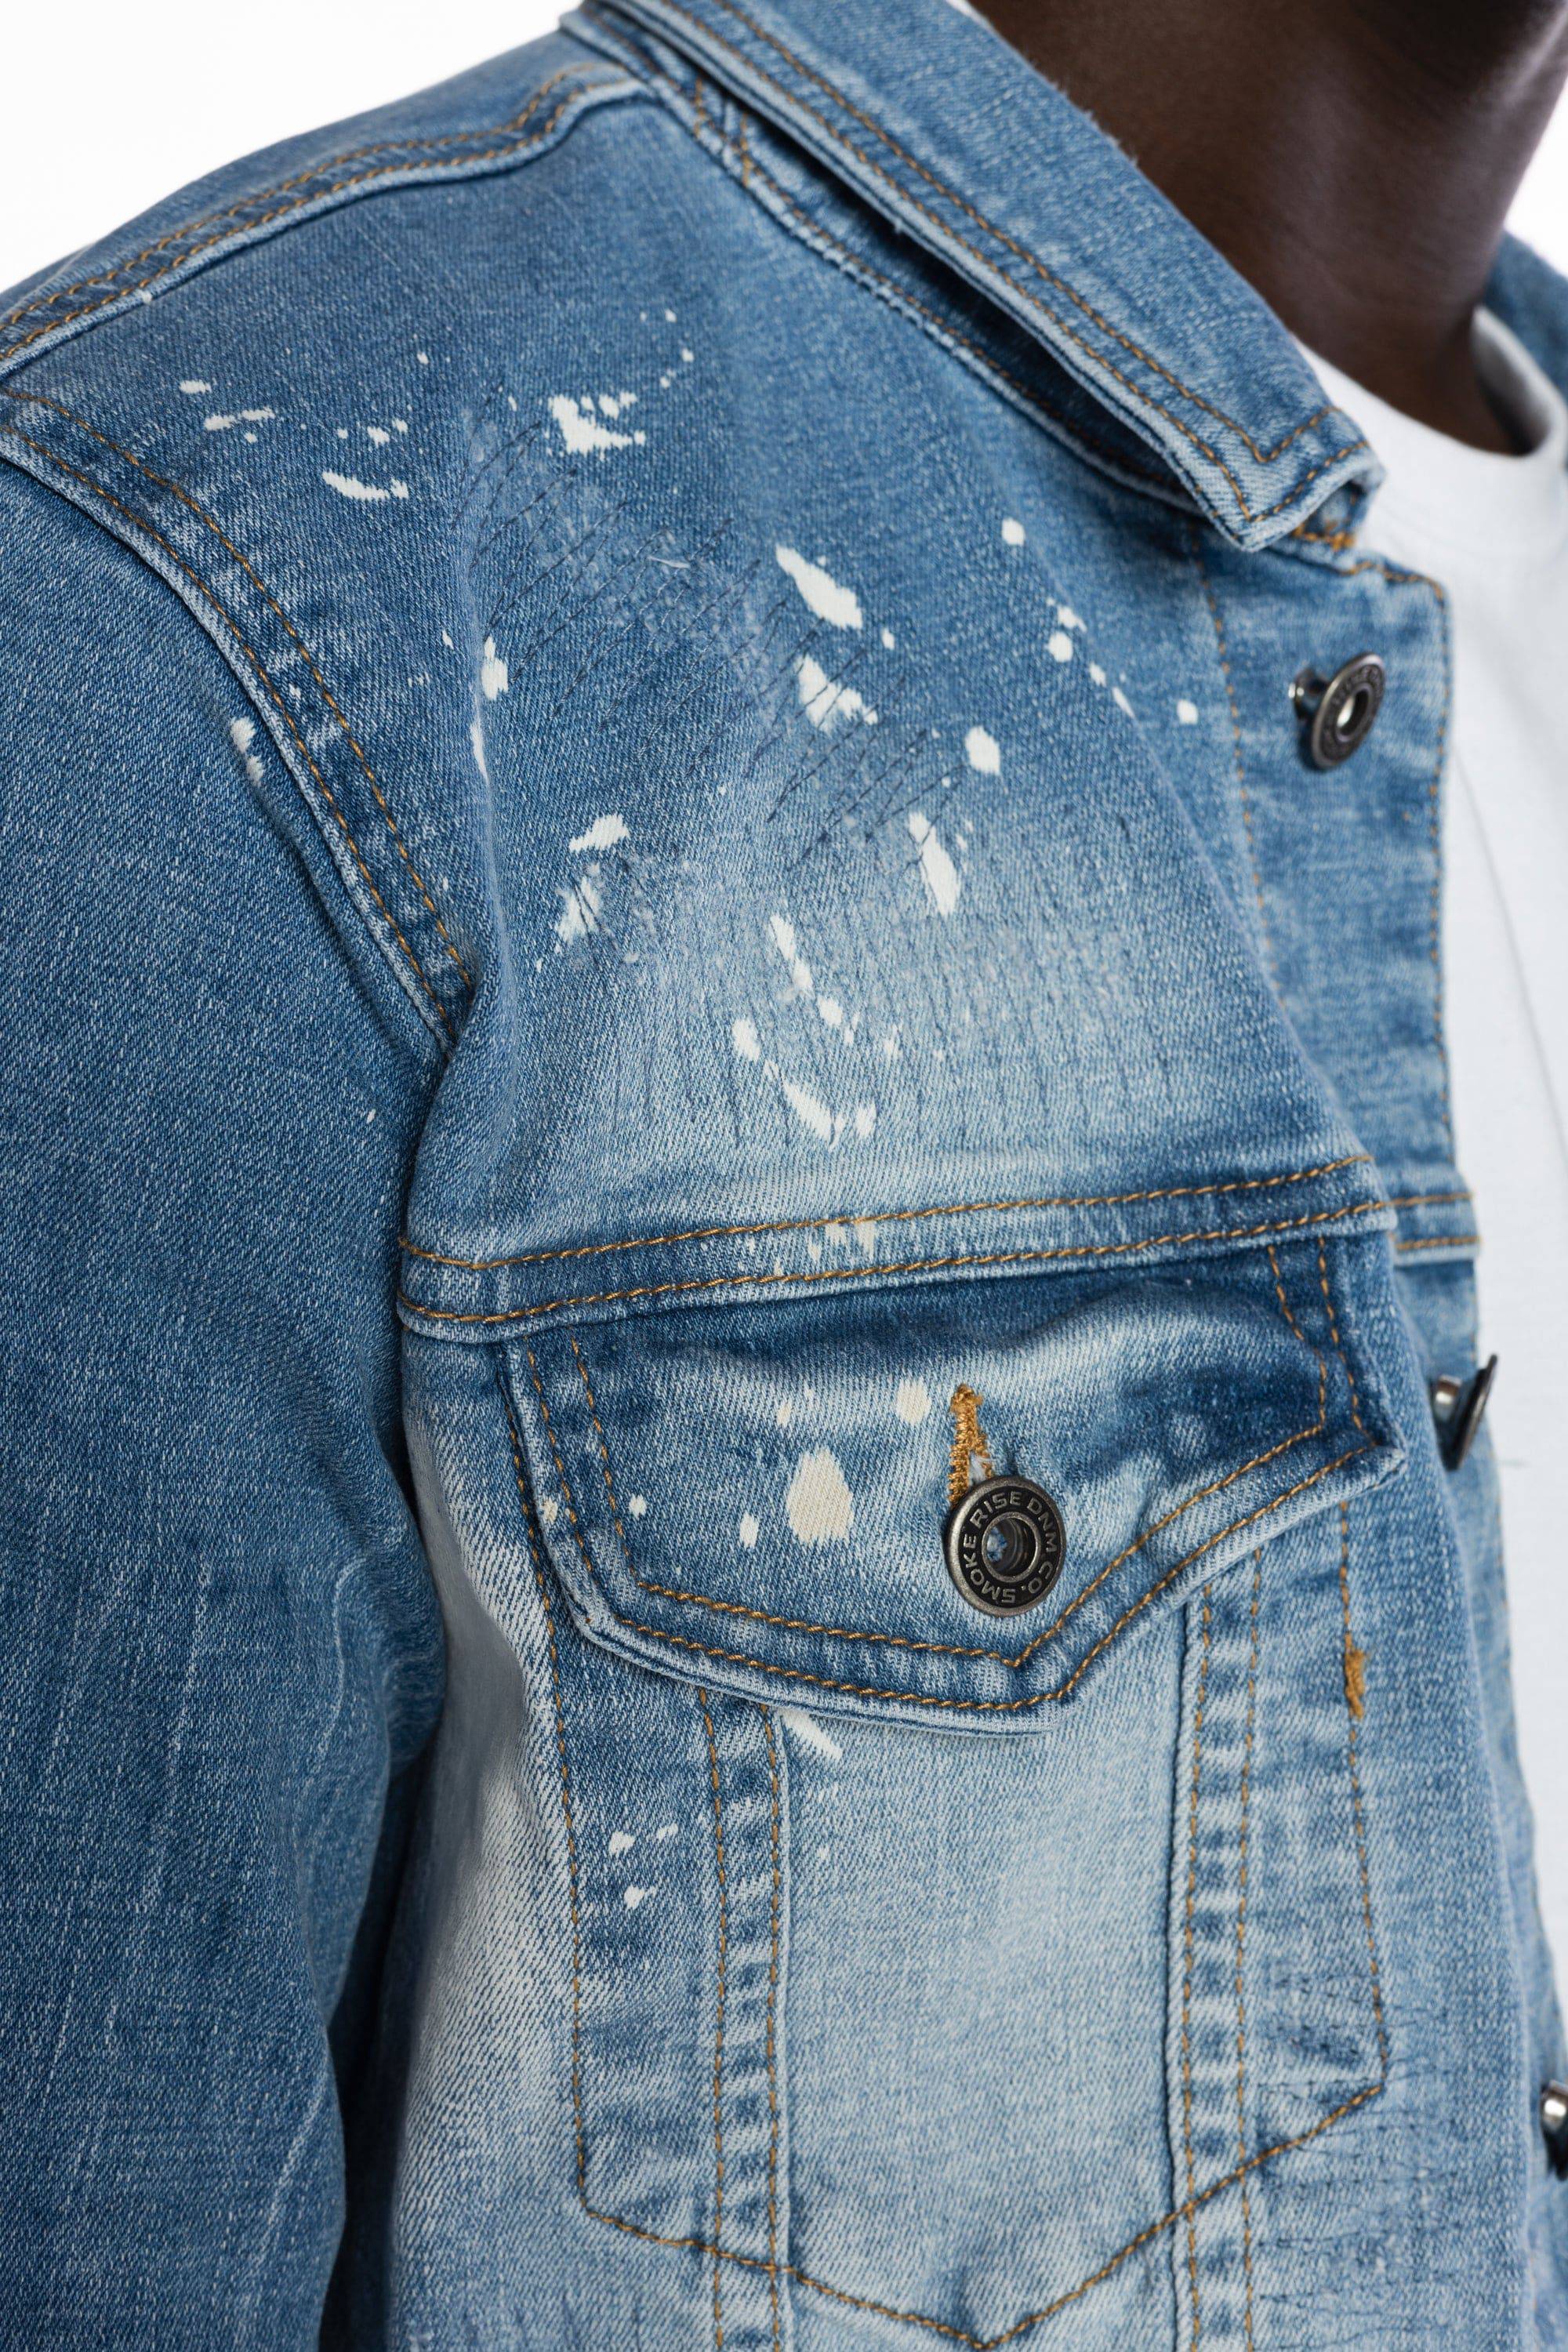 Smoke Rise - Men's Bleached Detail Semi Basic Denim Jacket Ocean Blue - 5XL - Urban/Streetwear